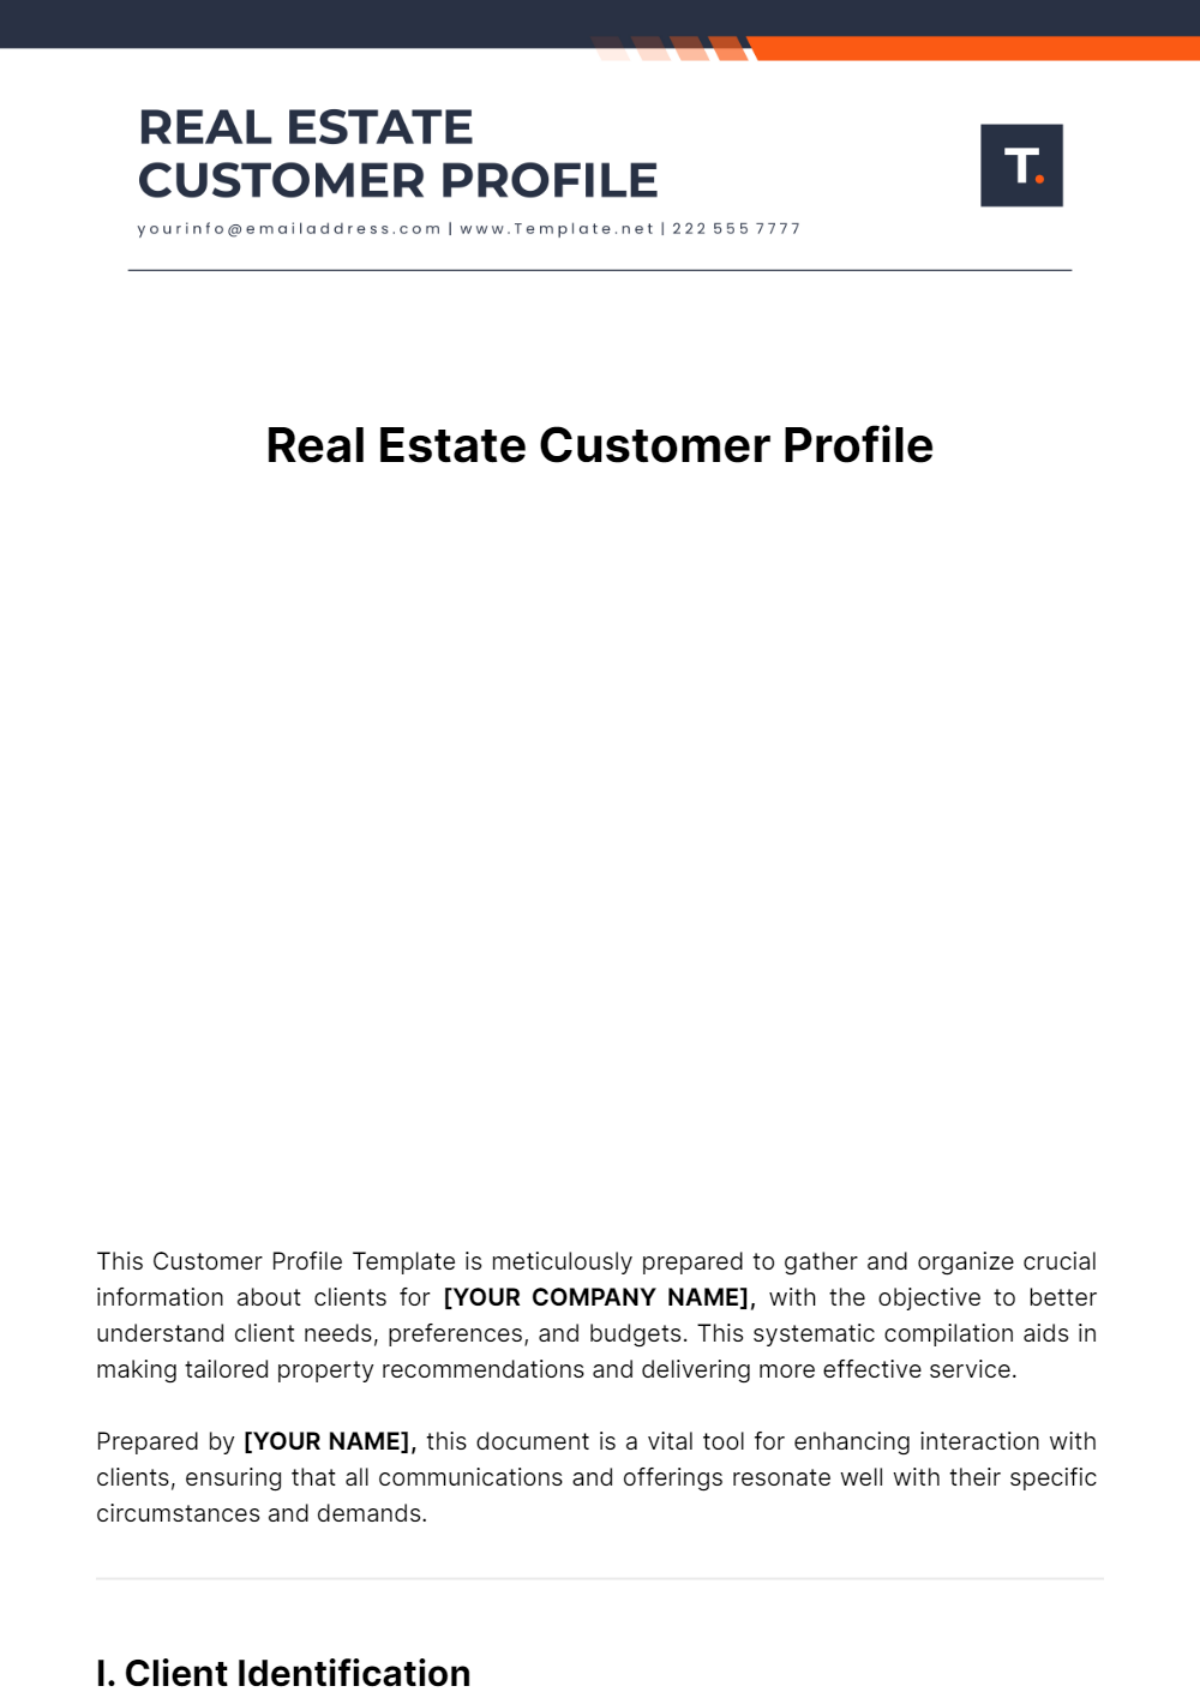 Real Estate Customer Profile Template